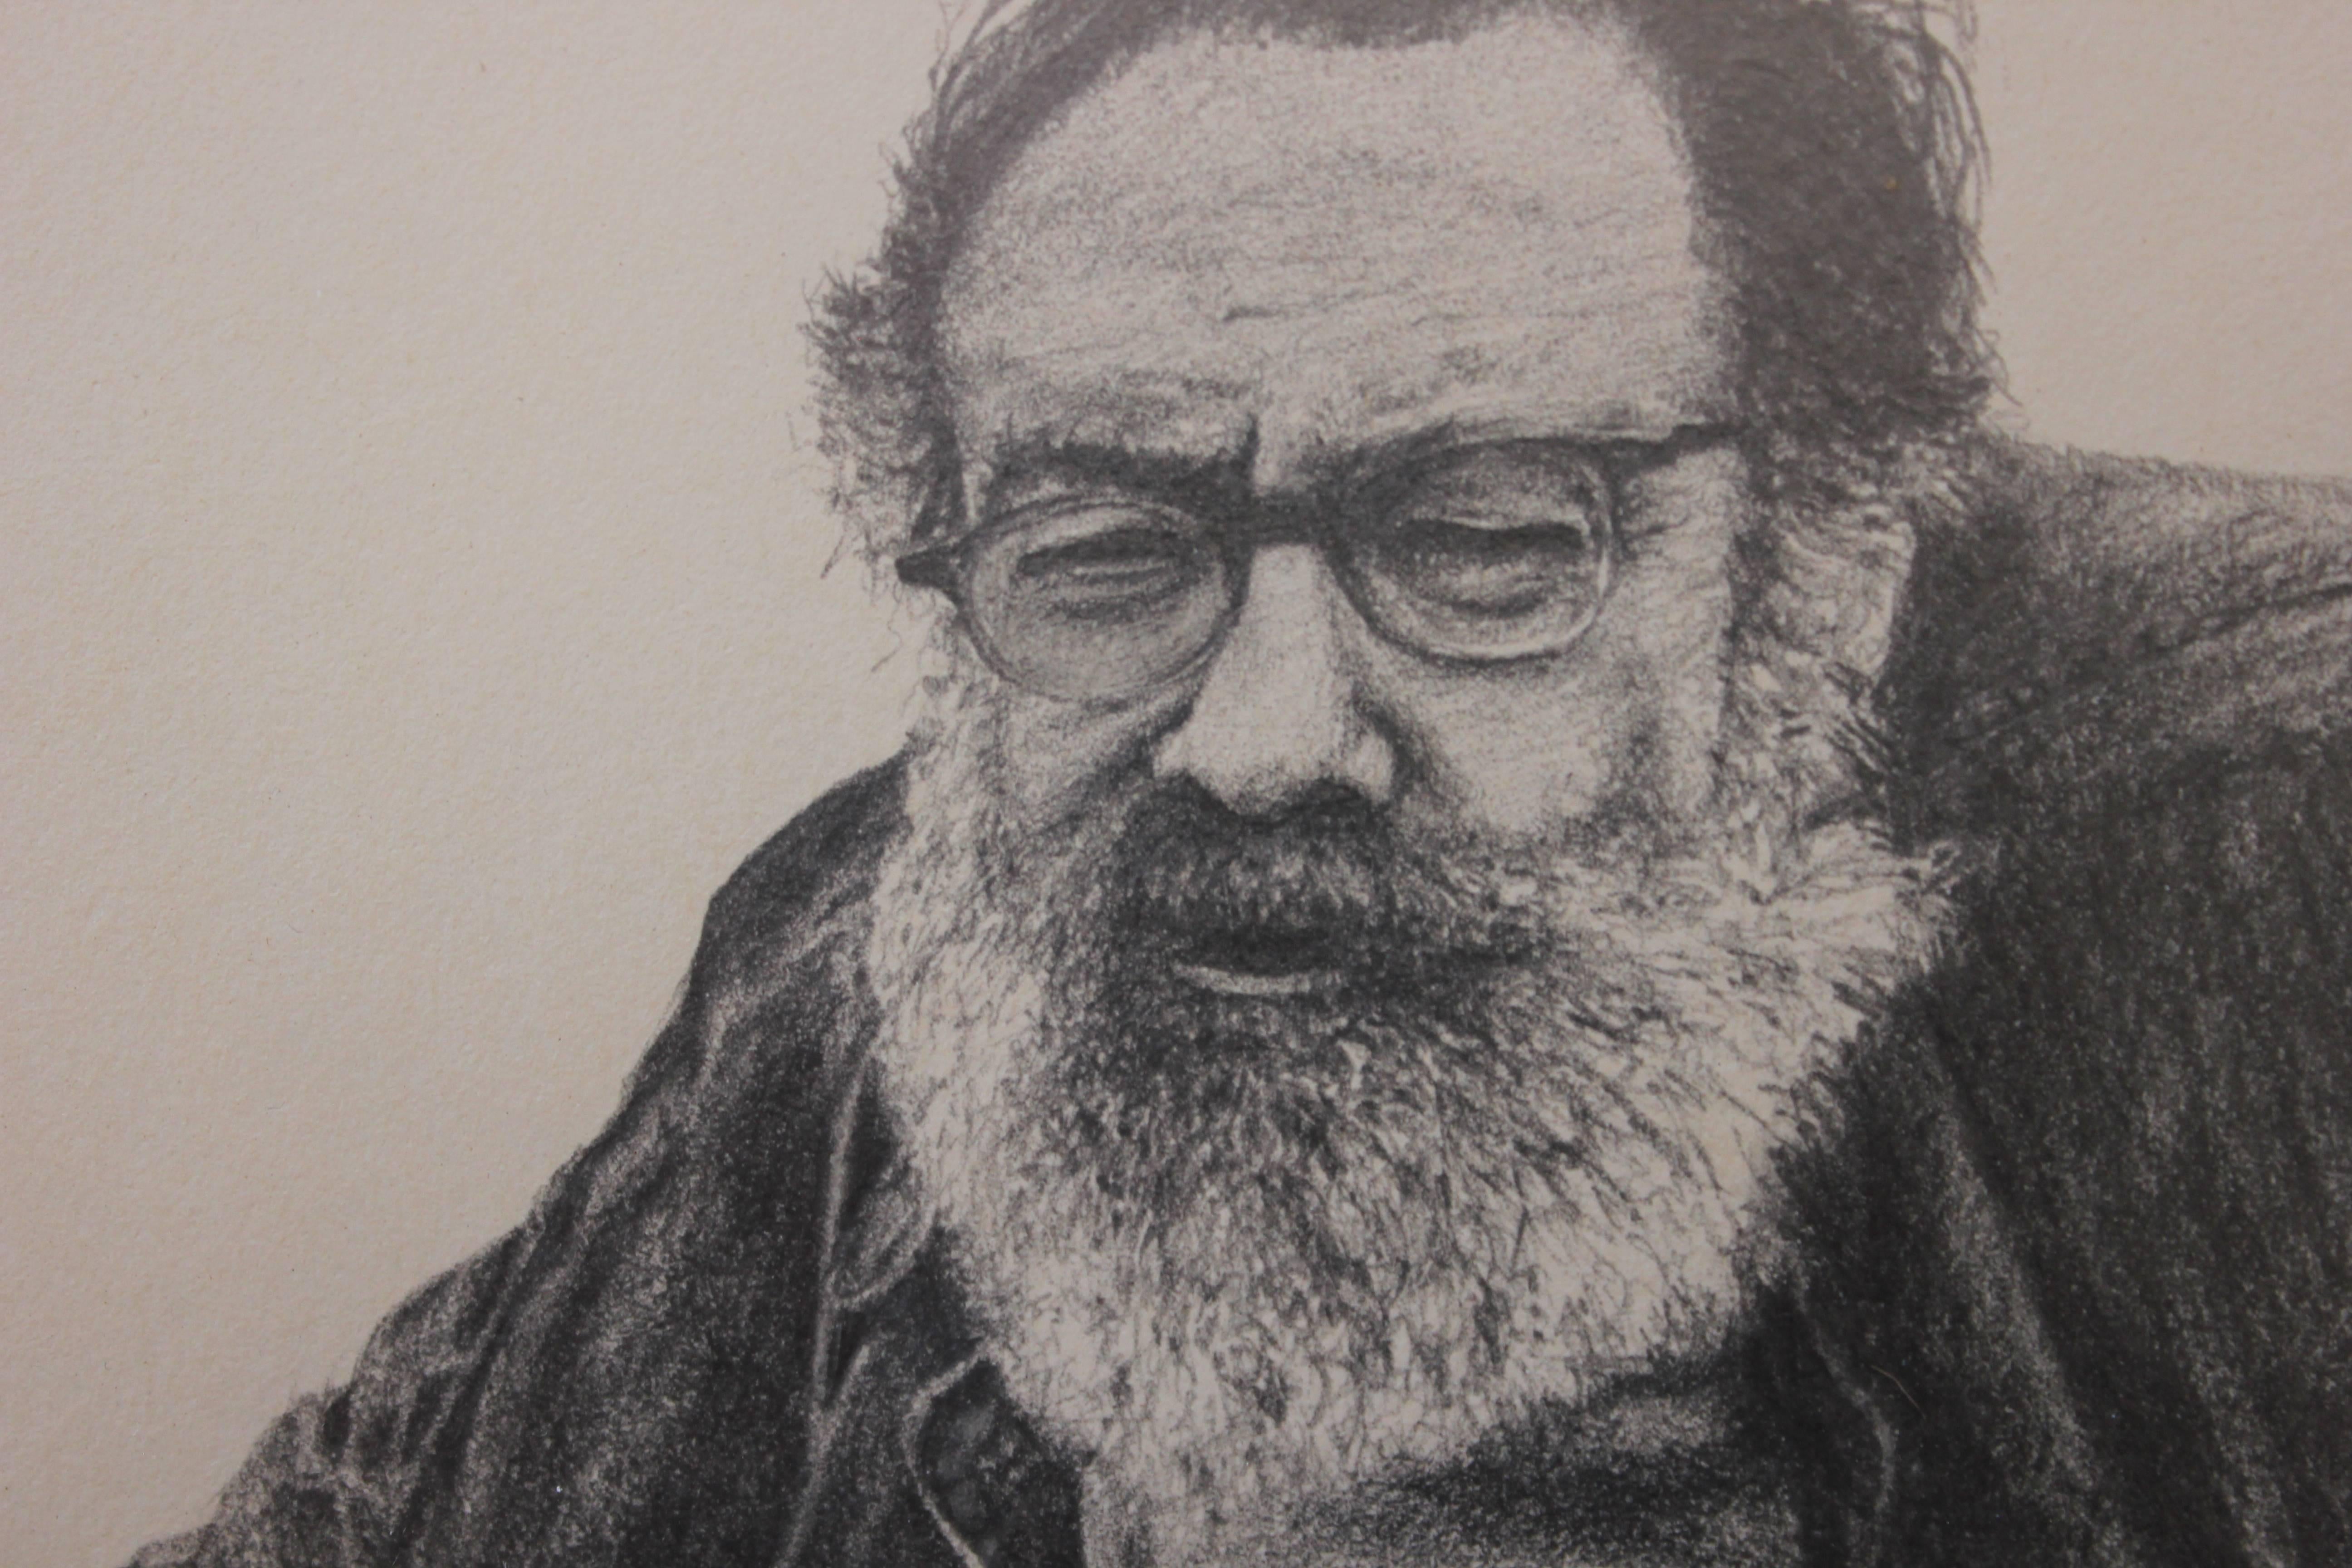 Portrait Sketch of Bearded Man - Modern Art by C. Hallam